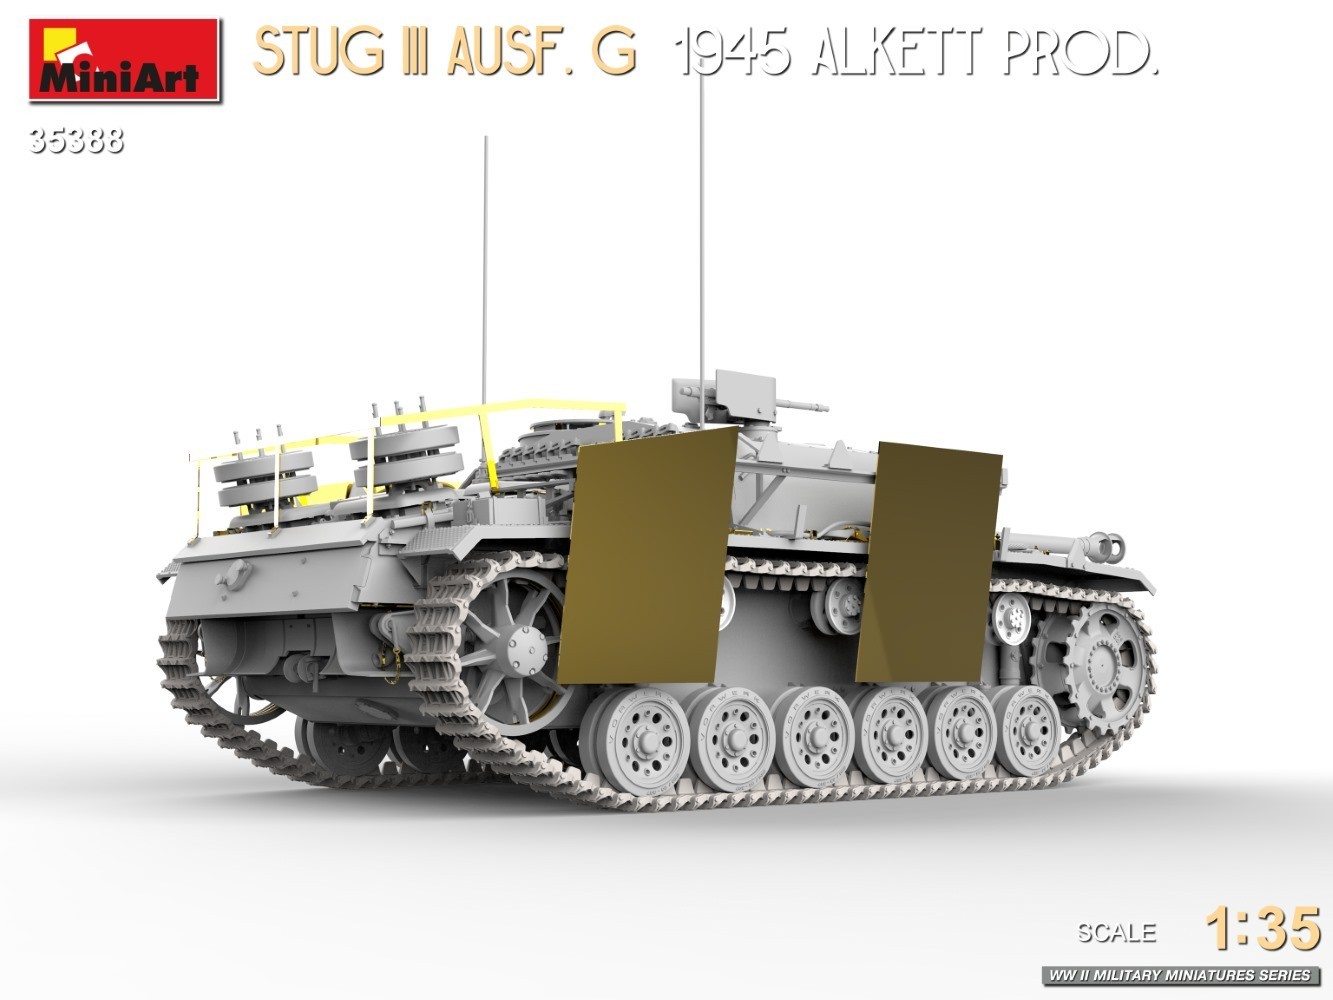 MiniArt to Release Highly Detailed 1/35 StuG III Ausf. G 1945 Alkett Prod. Model Kit CAD-7